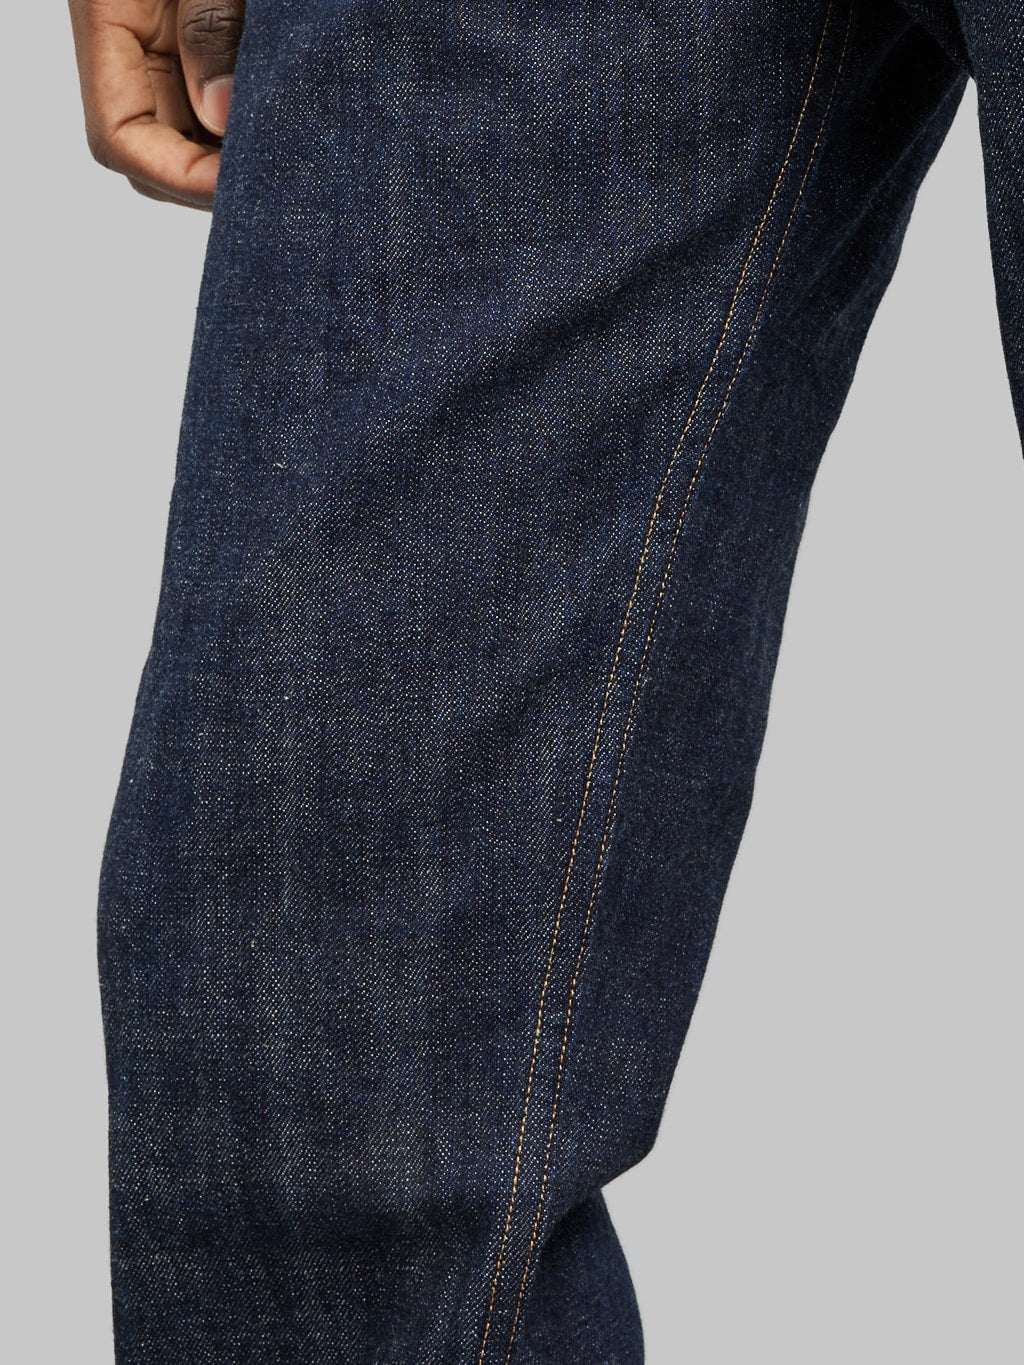 3sixteen CT 20th Anniversary Burkina Faso Classic Tapered Jeans inseam